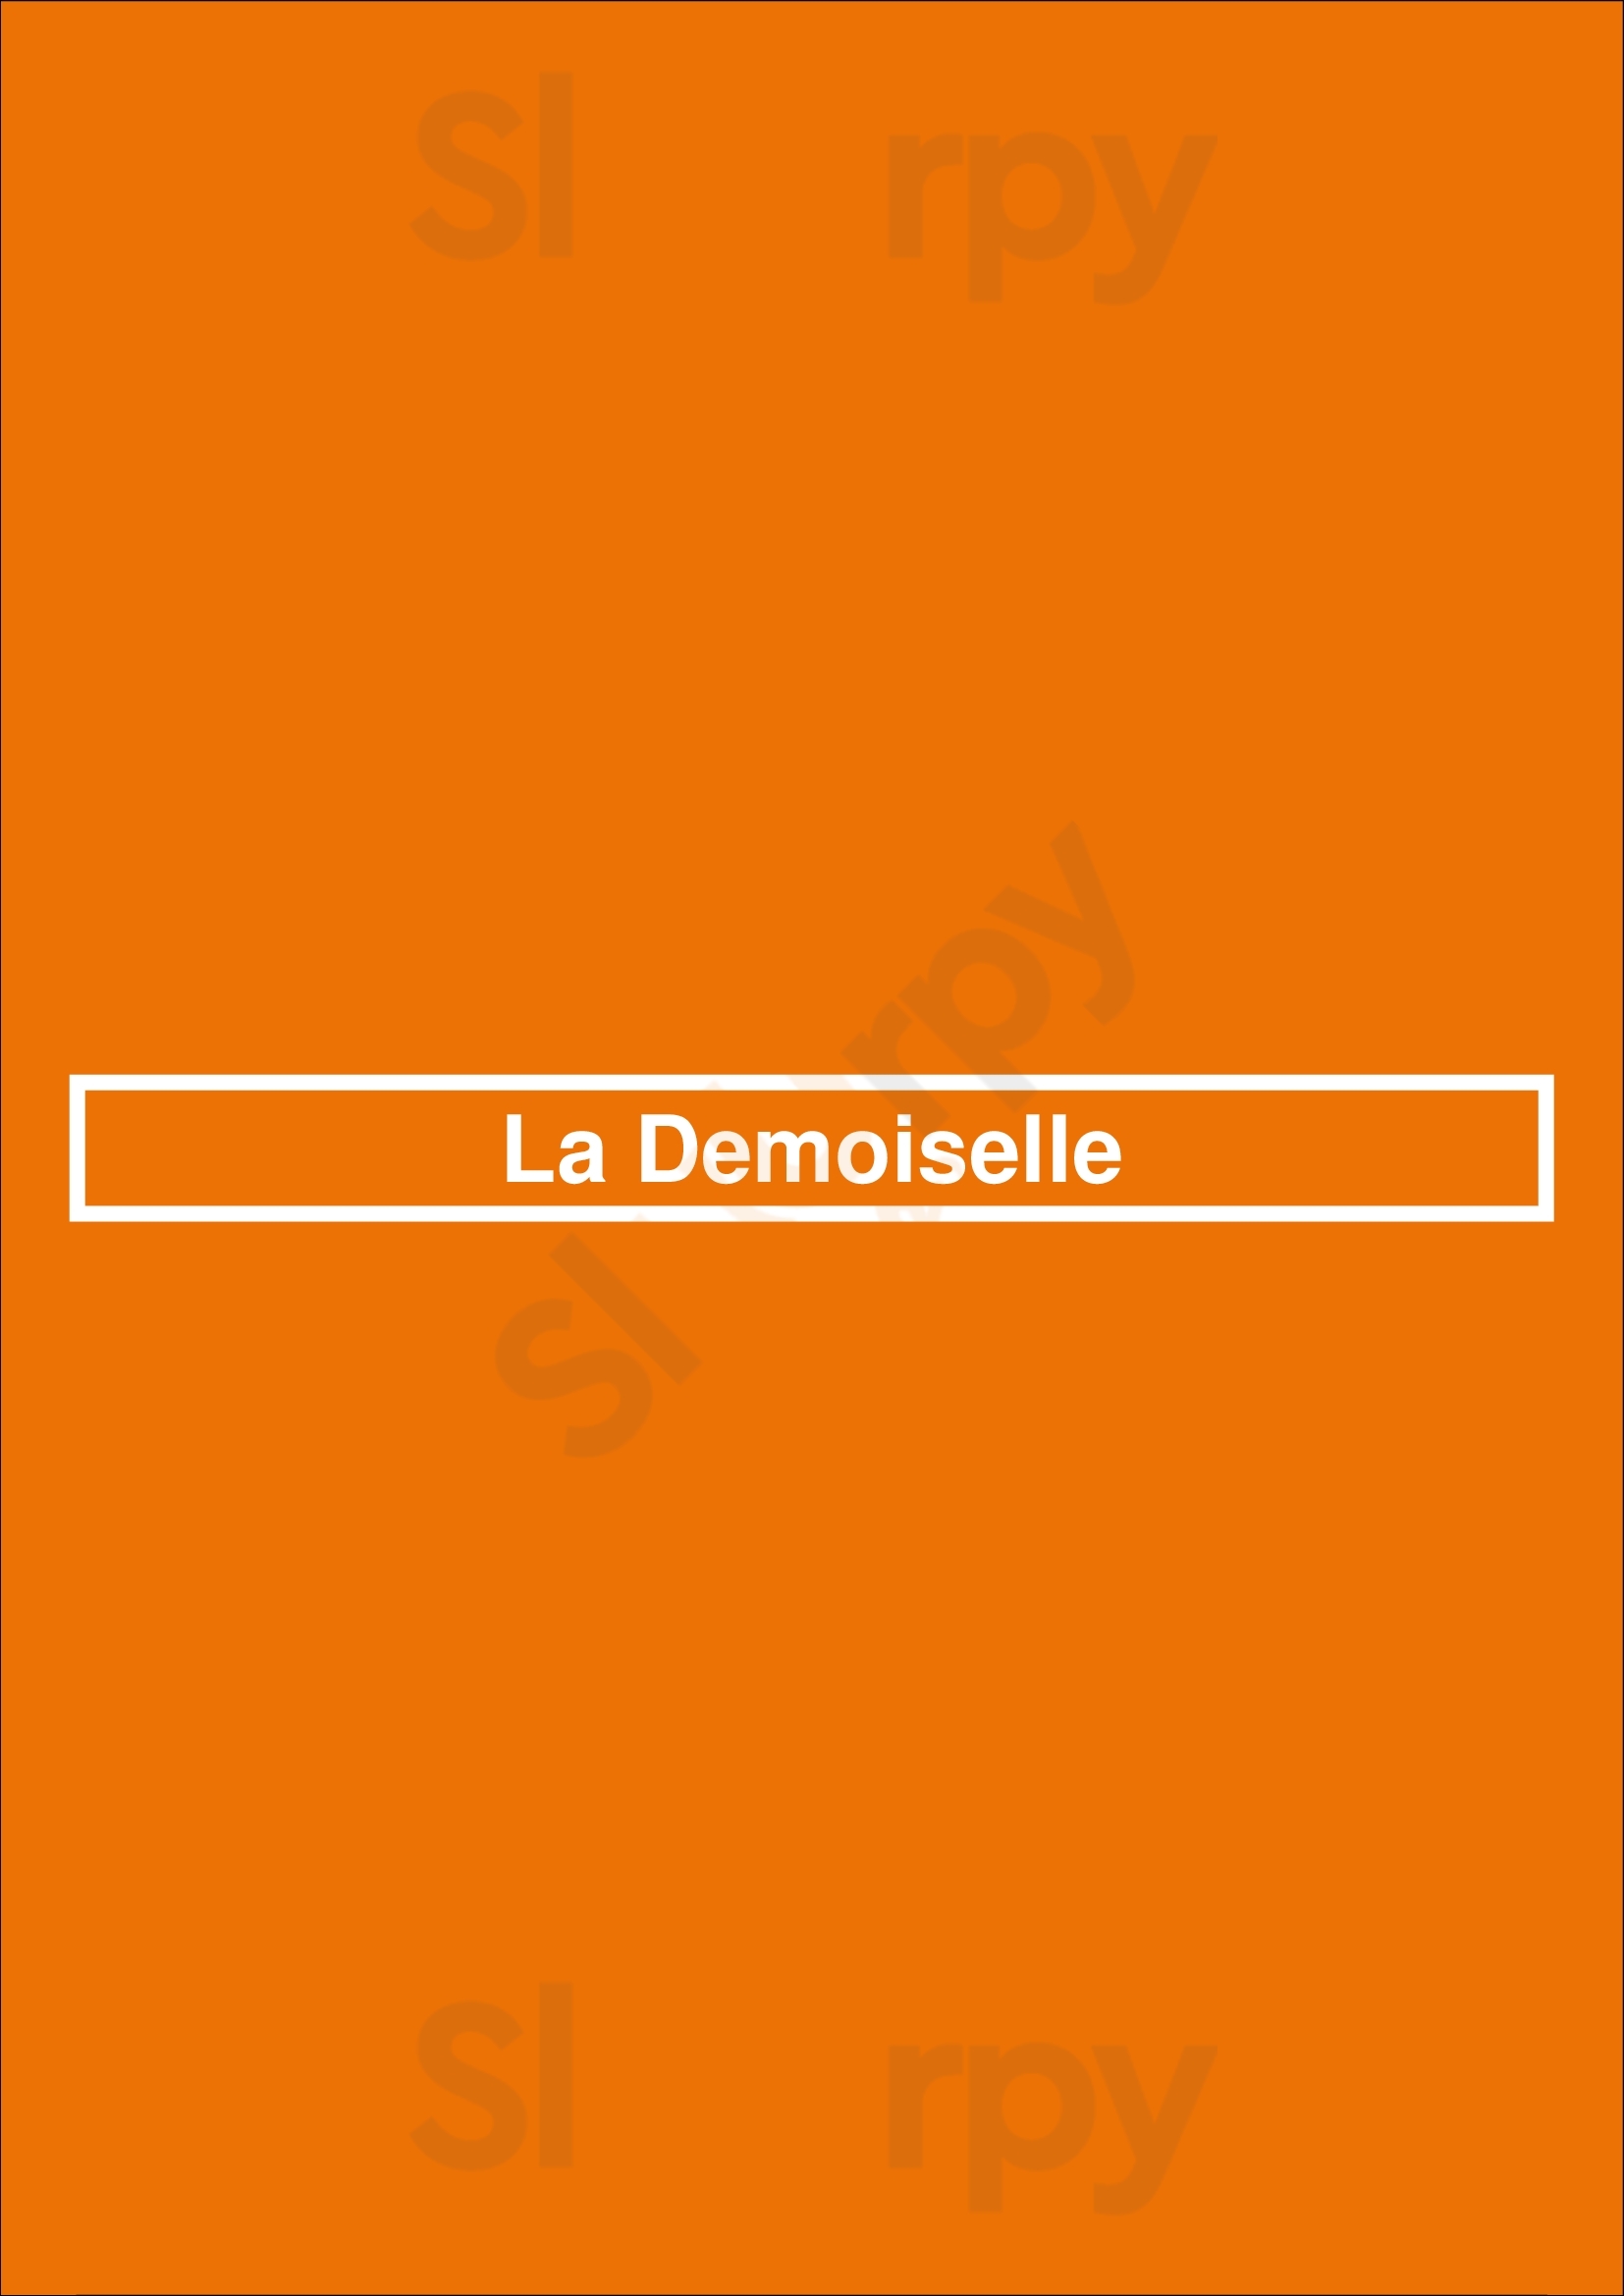 La Demoiselle Paris Menu - 1